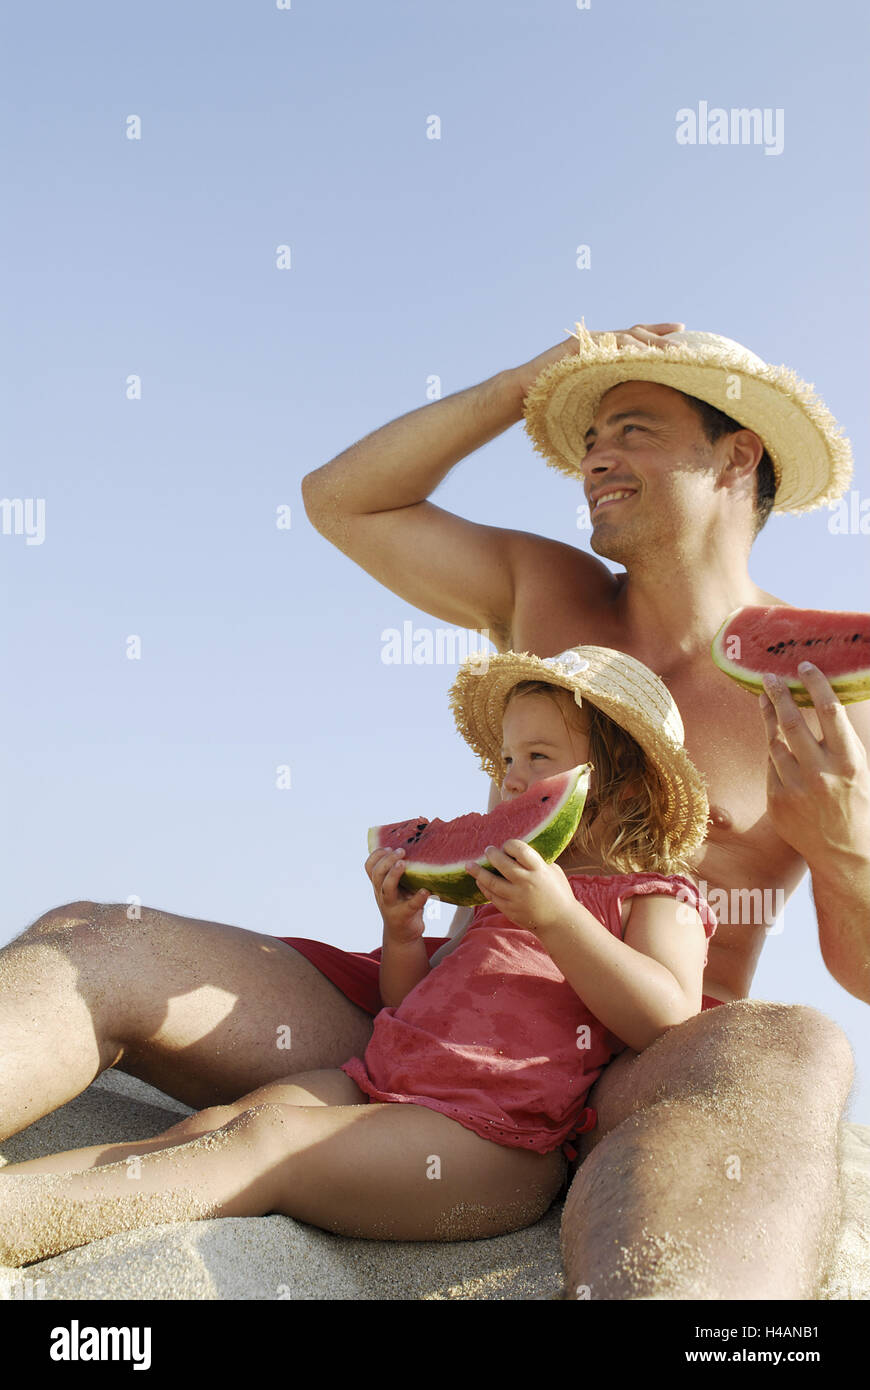 Girls, man, beach, sit, eat melon, Stock Photo